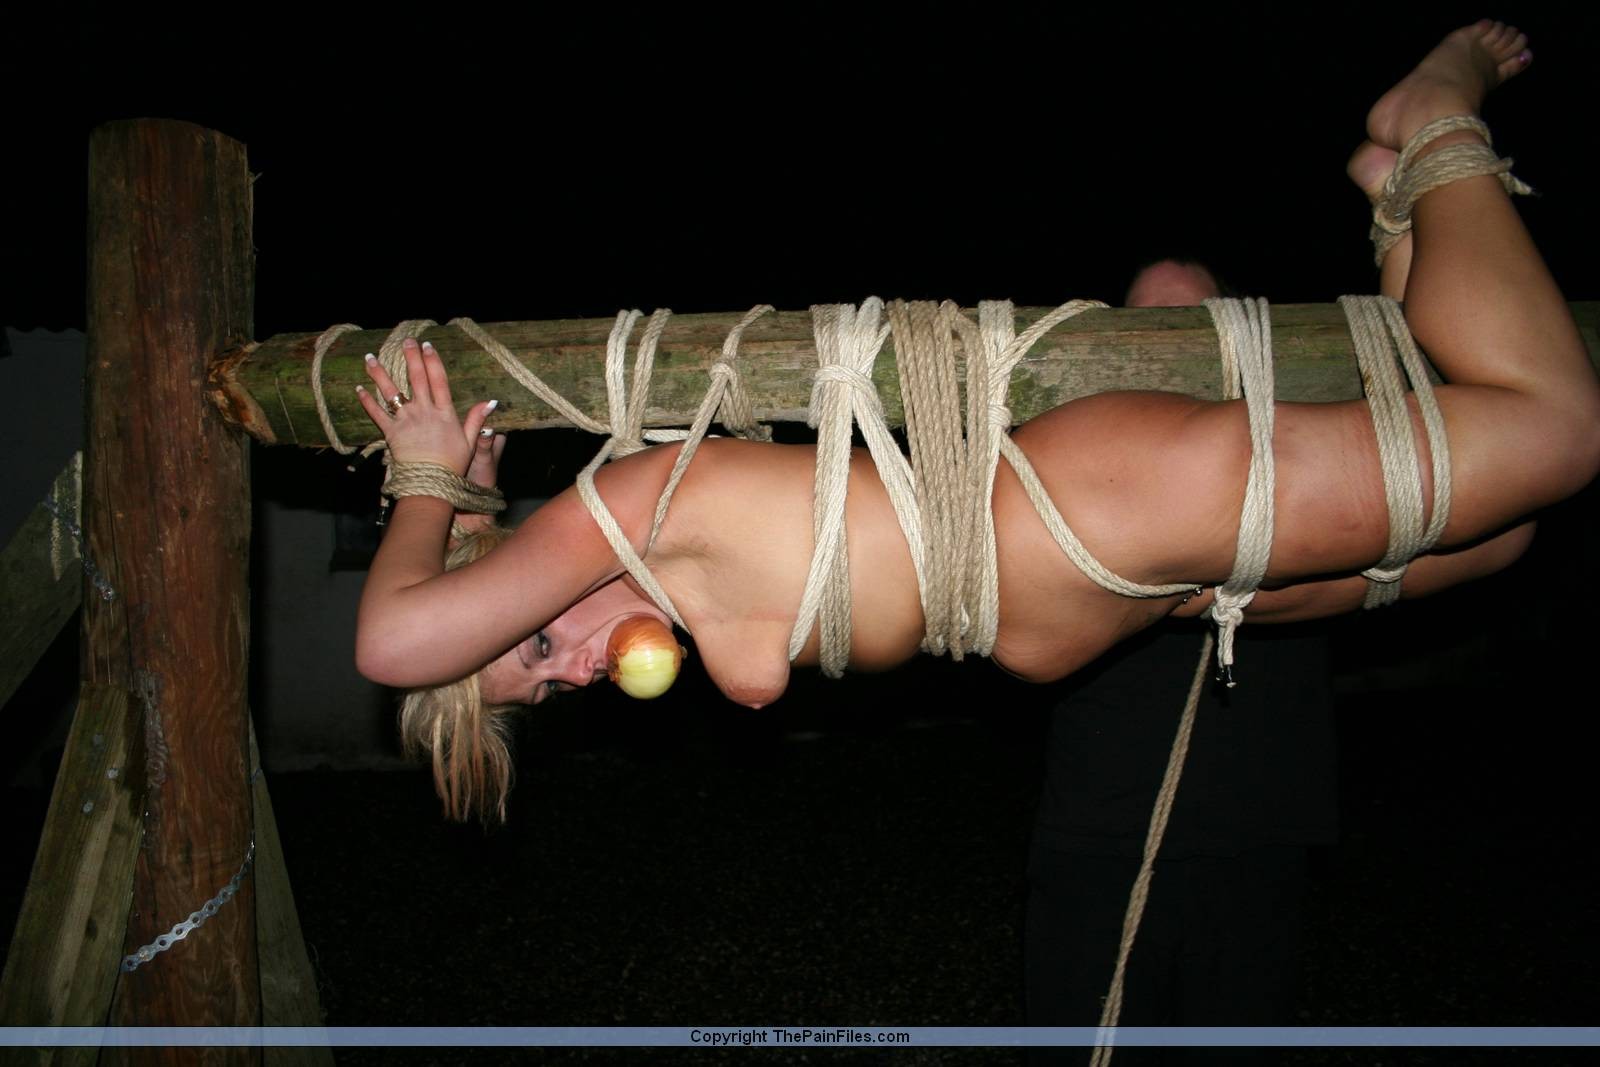 Outdoor spitroast bondage and domination of blonde bdsm slavegirl Crystel Lei #72185825